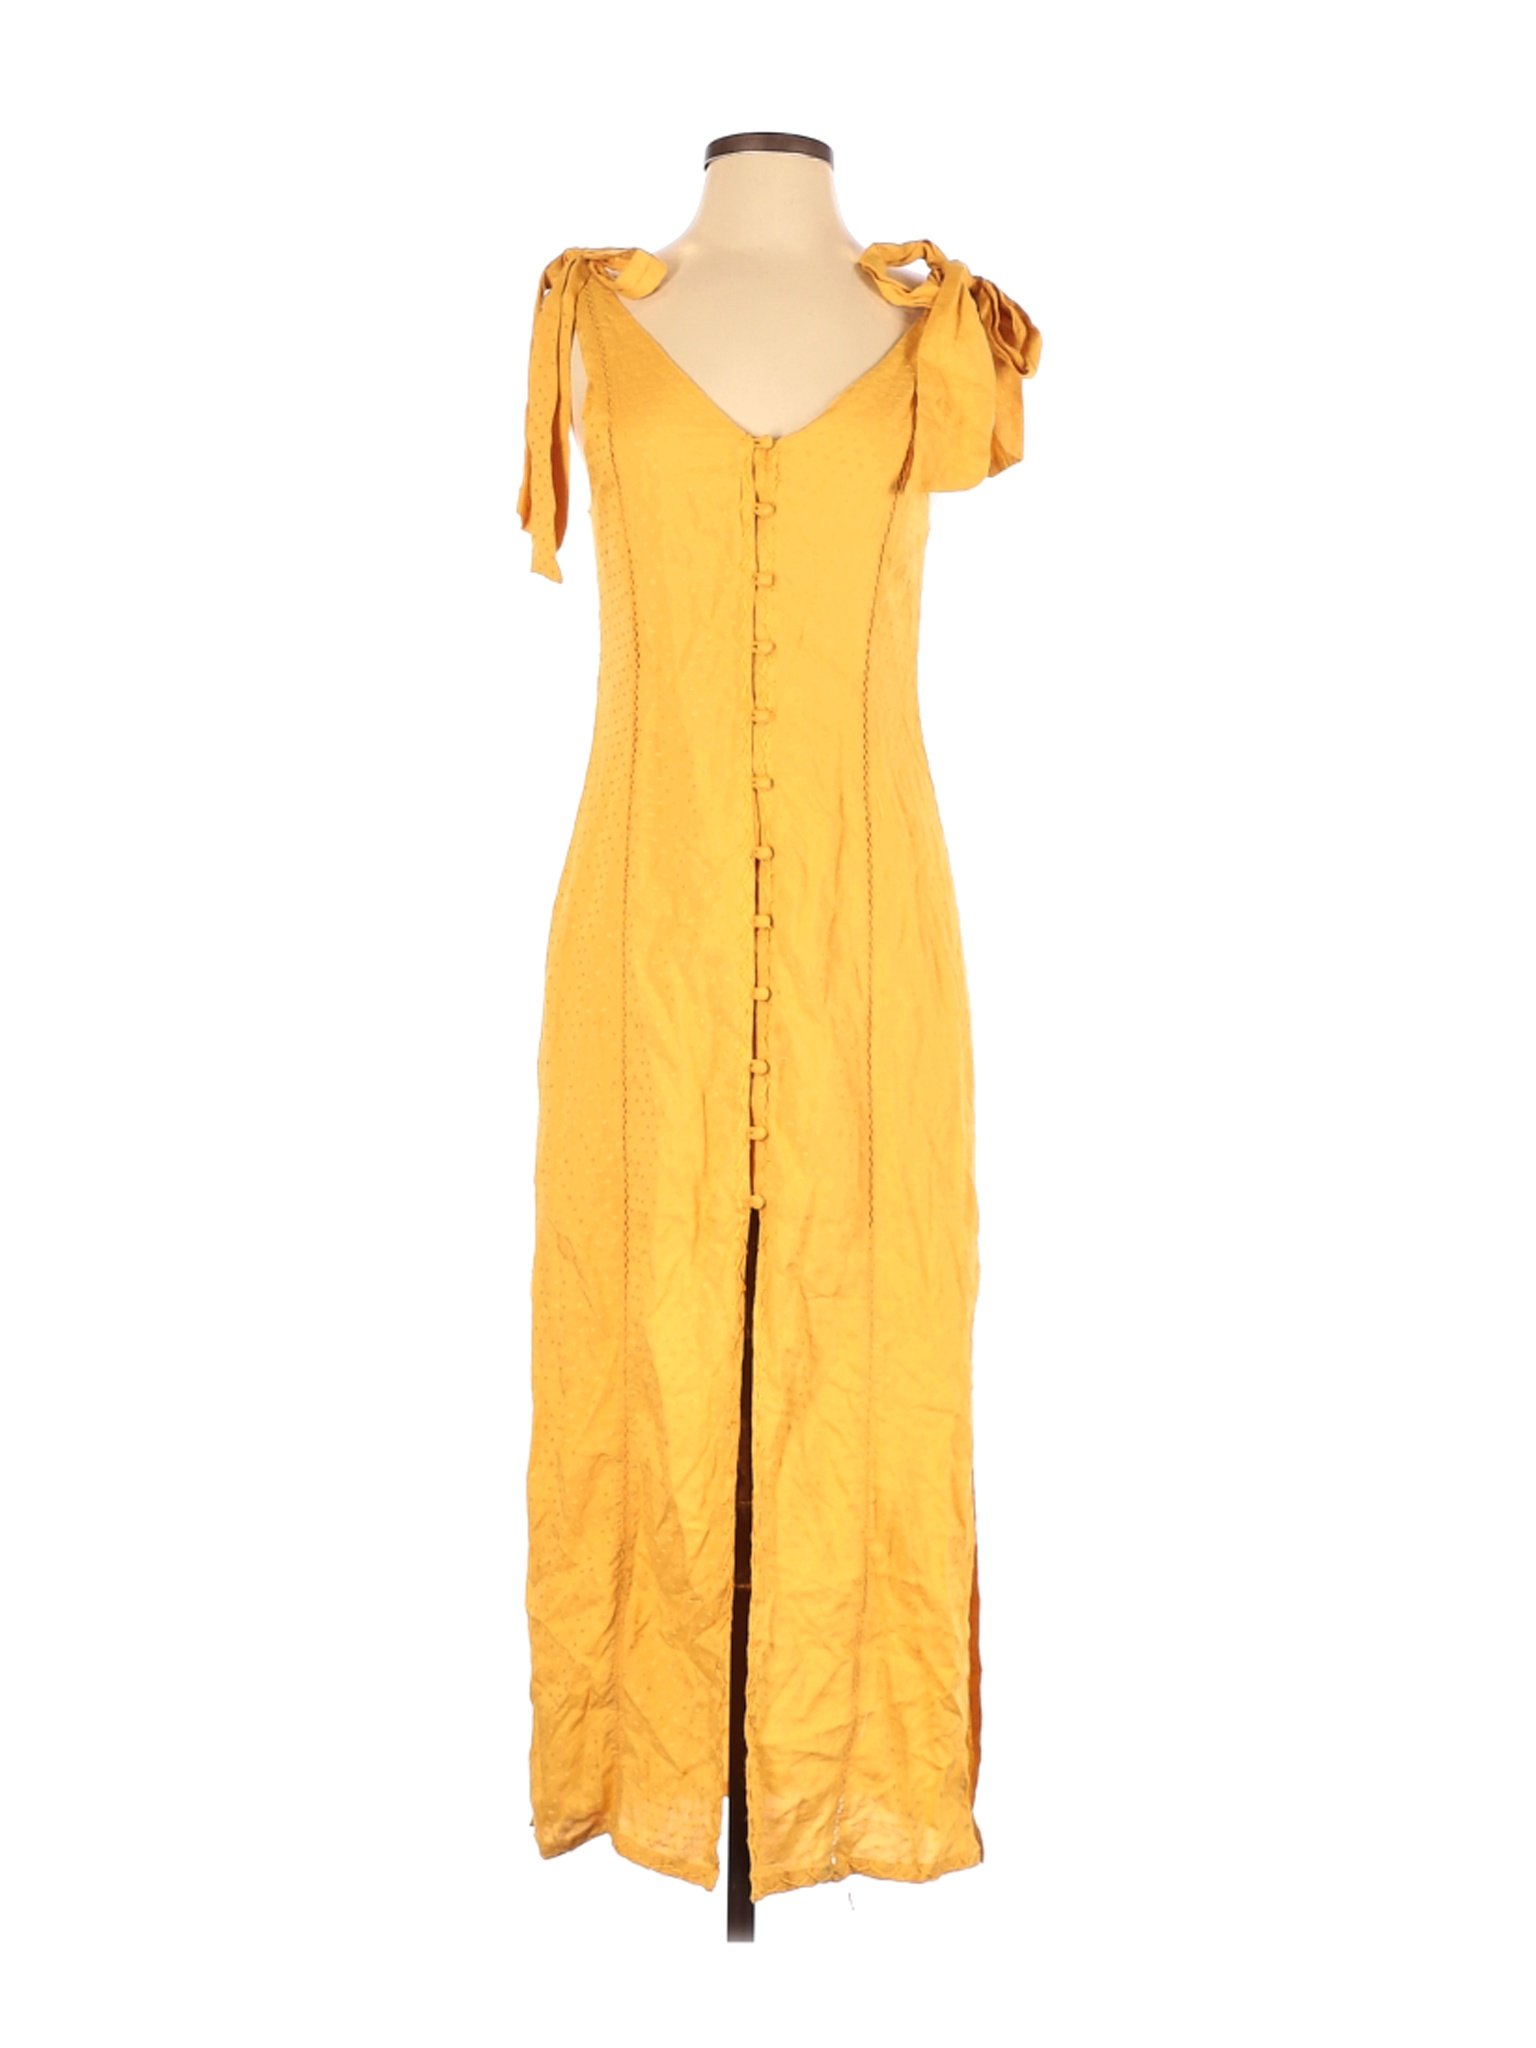 Tularosa Women Yellow Casual Dress S | eBay